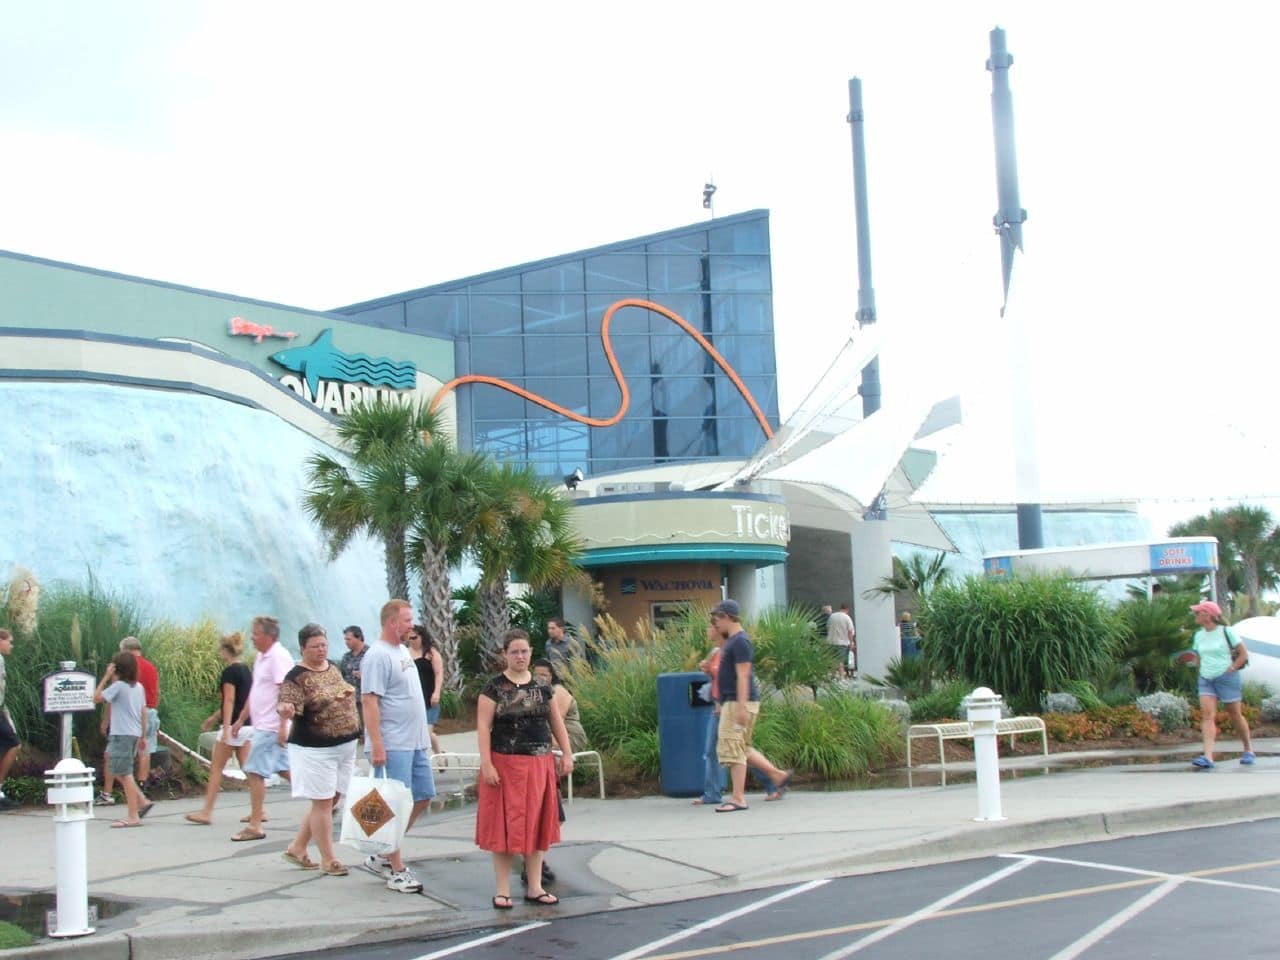 Ripley's Aquarium in Myrtle Beach